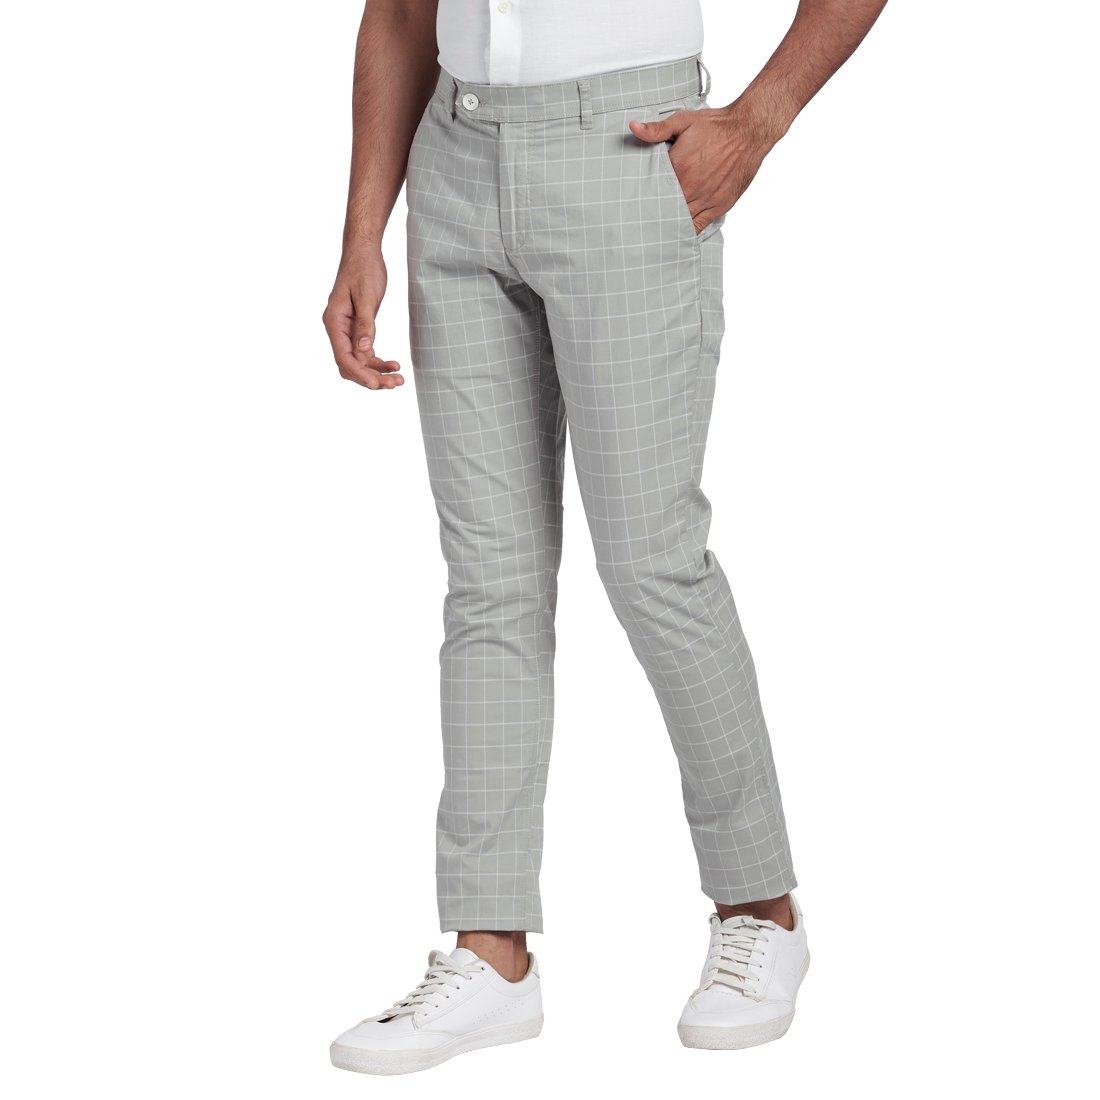 ColorPlus | ColorPlus Grey Trouser 2